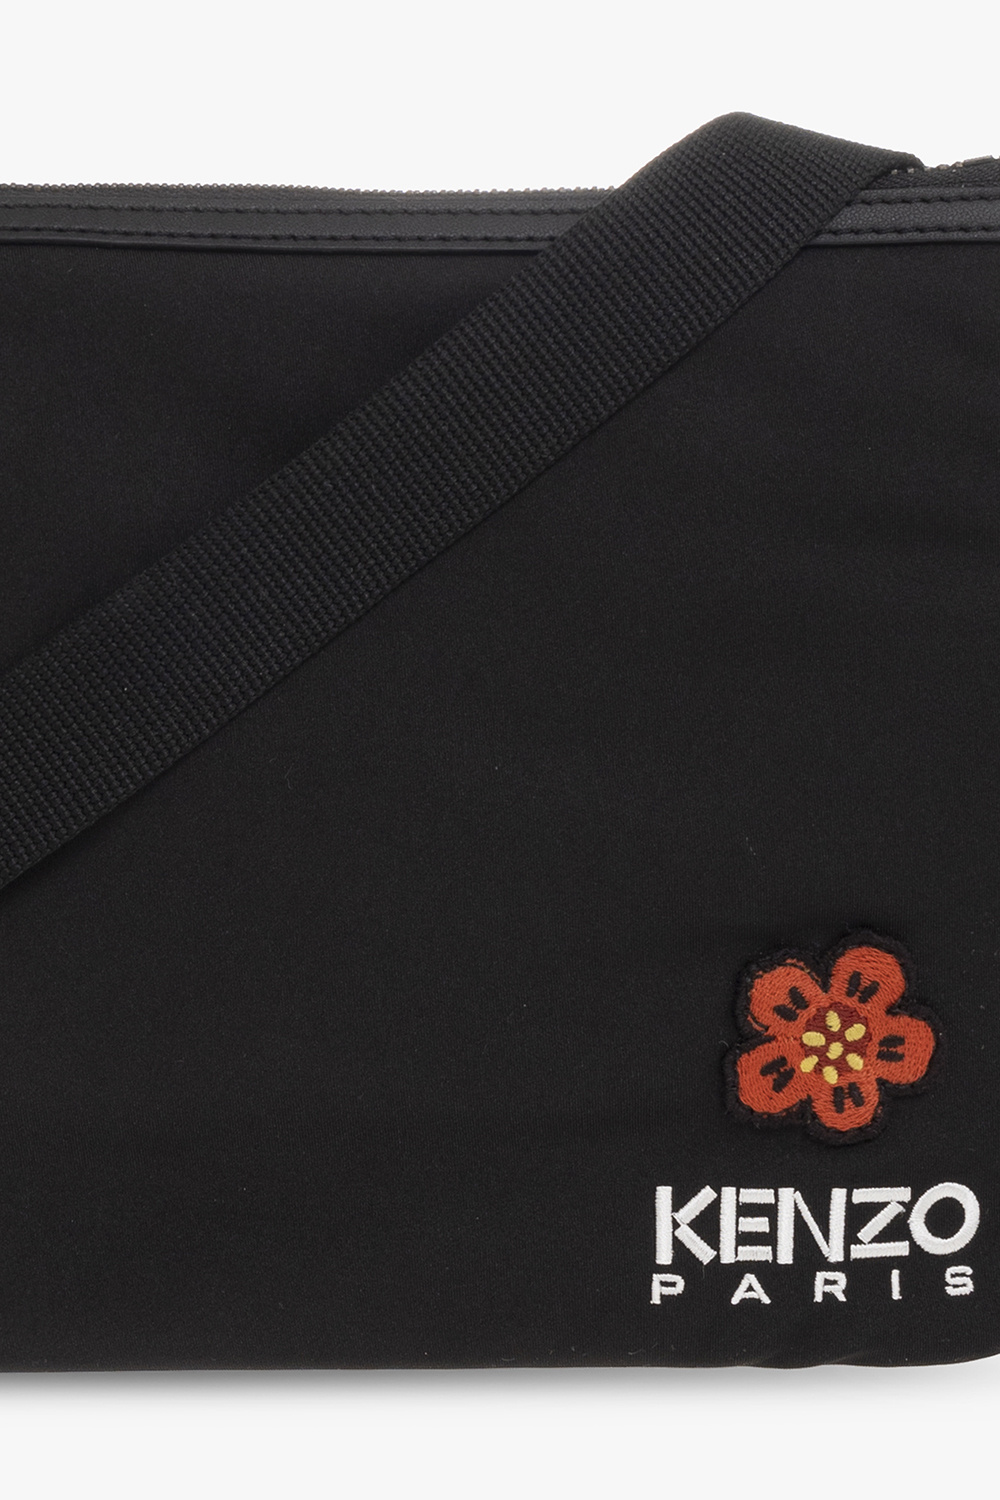 Kenzo Backpack HERSCHEL Dawson 10233-05668 Saddle Black